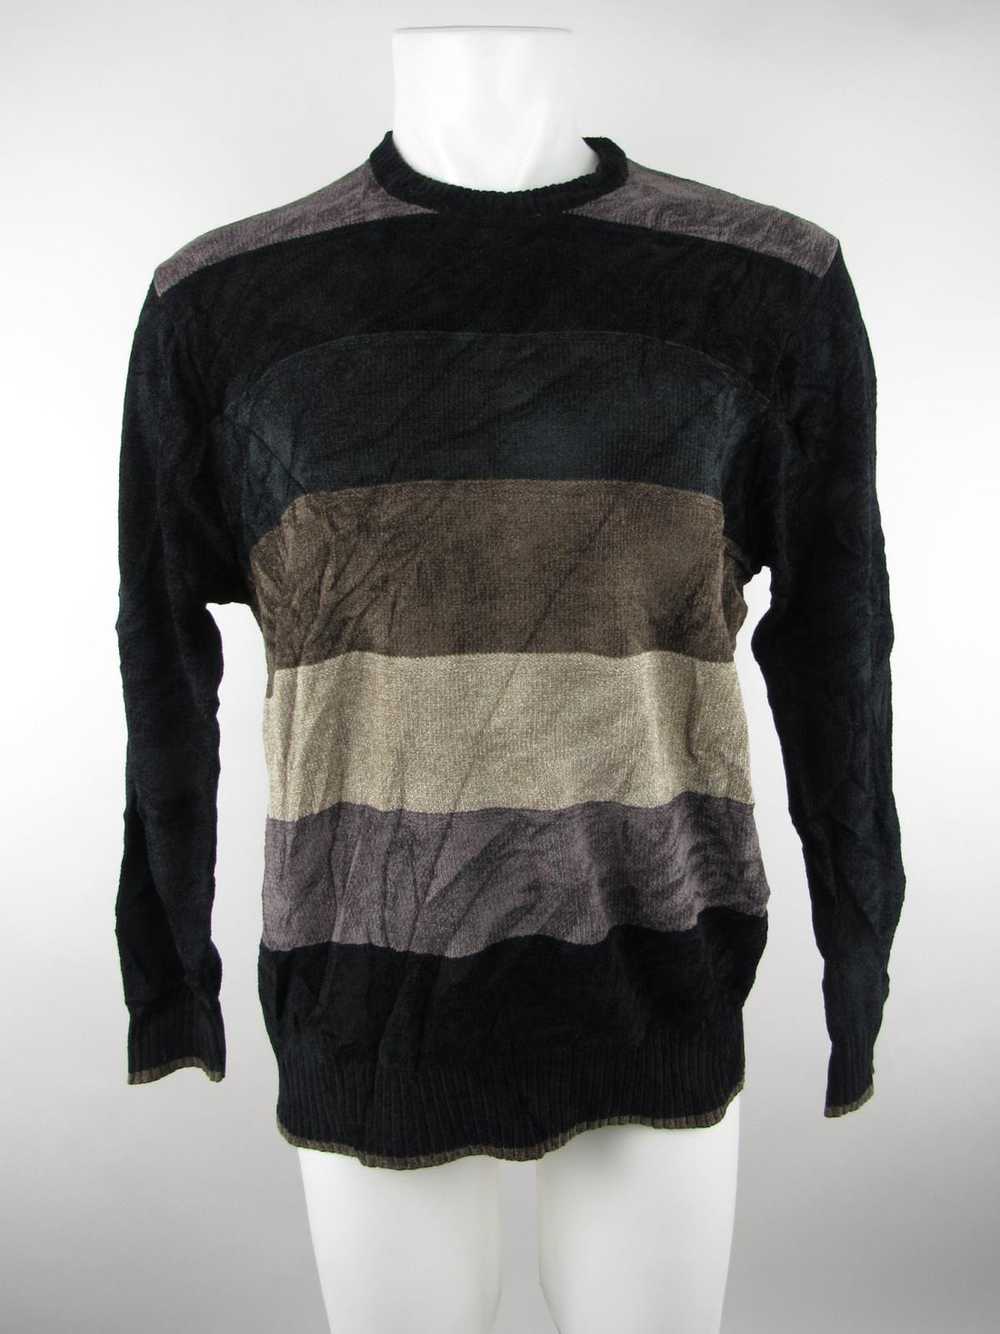 David Taylor Collection Crewneck Sweater - image 1